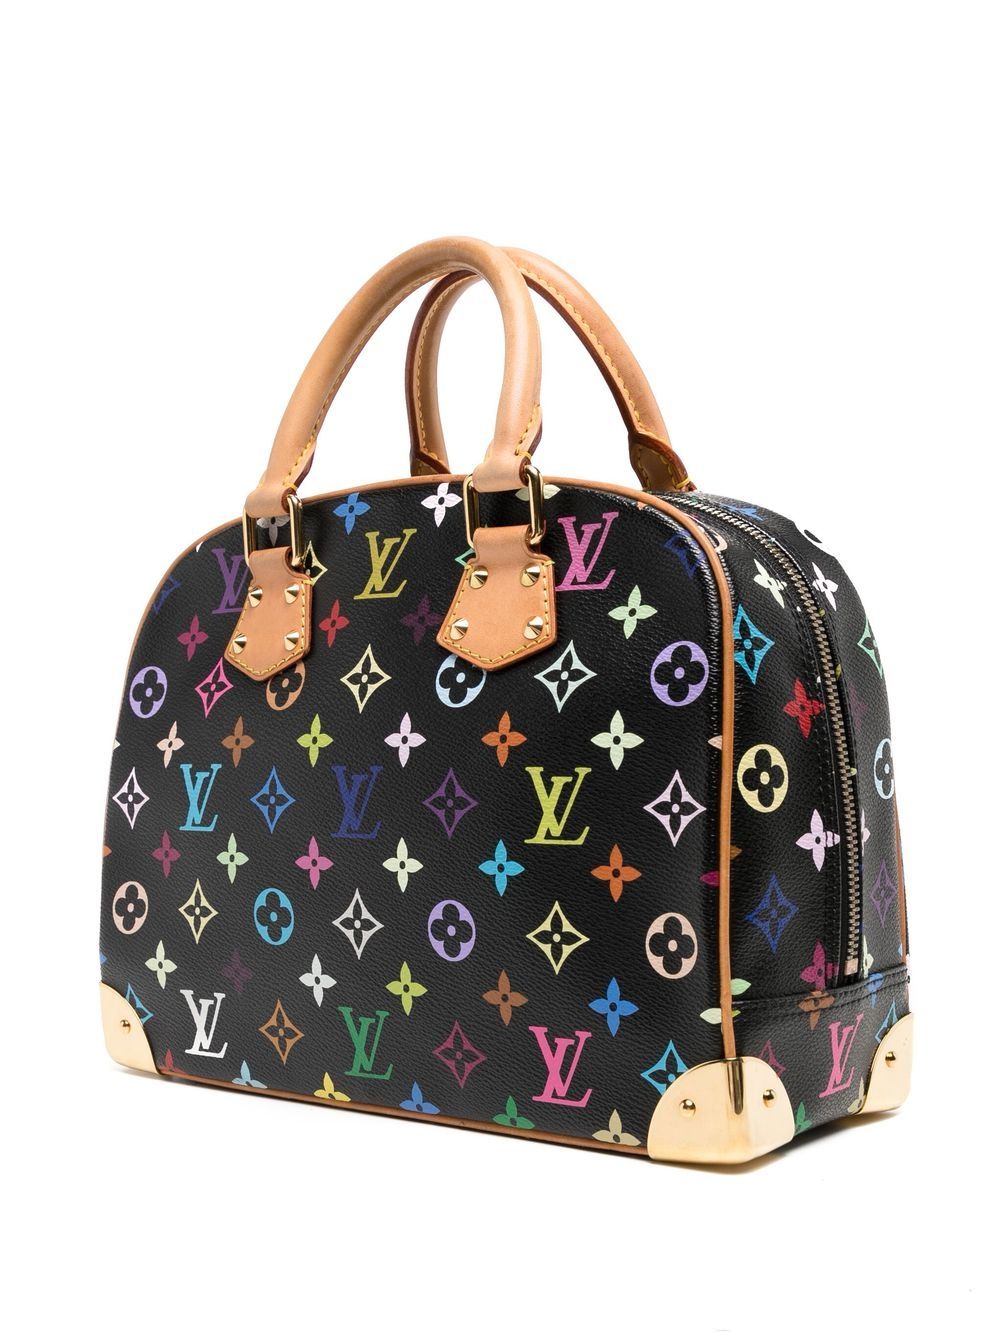 Louis Vuitton - Authenticated Trouville Handbag - Cloth Multicolour for Women, Very Good Condition